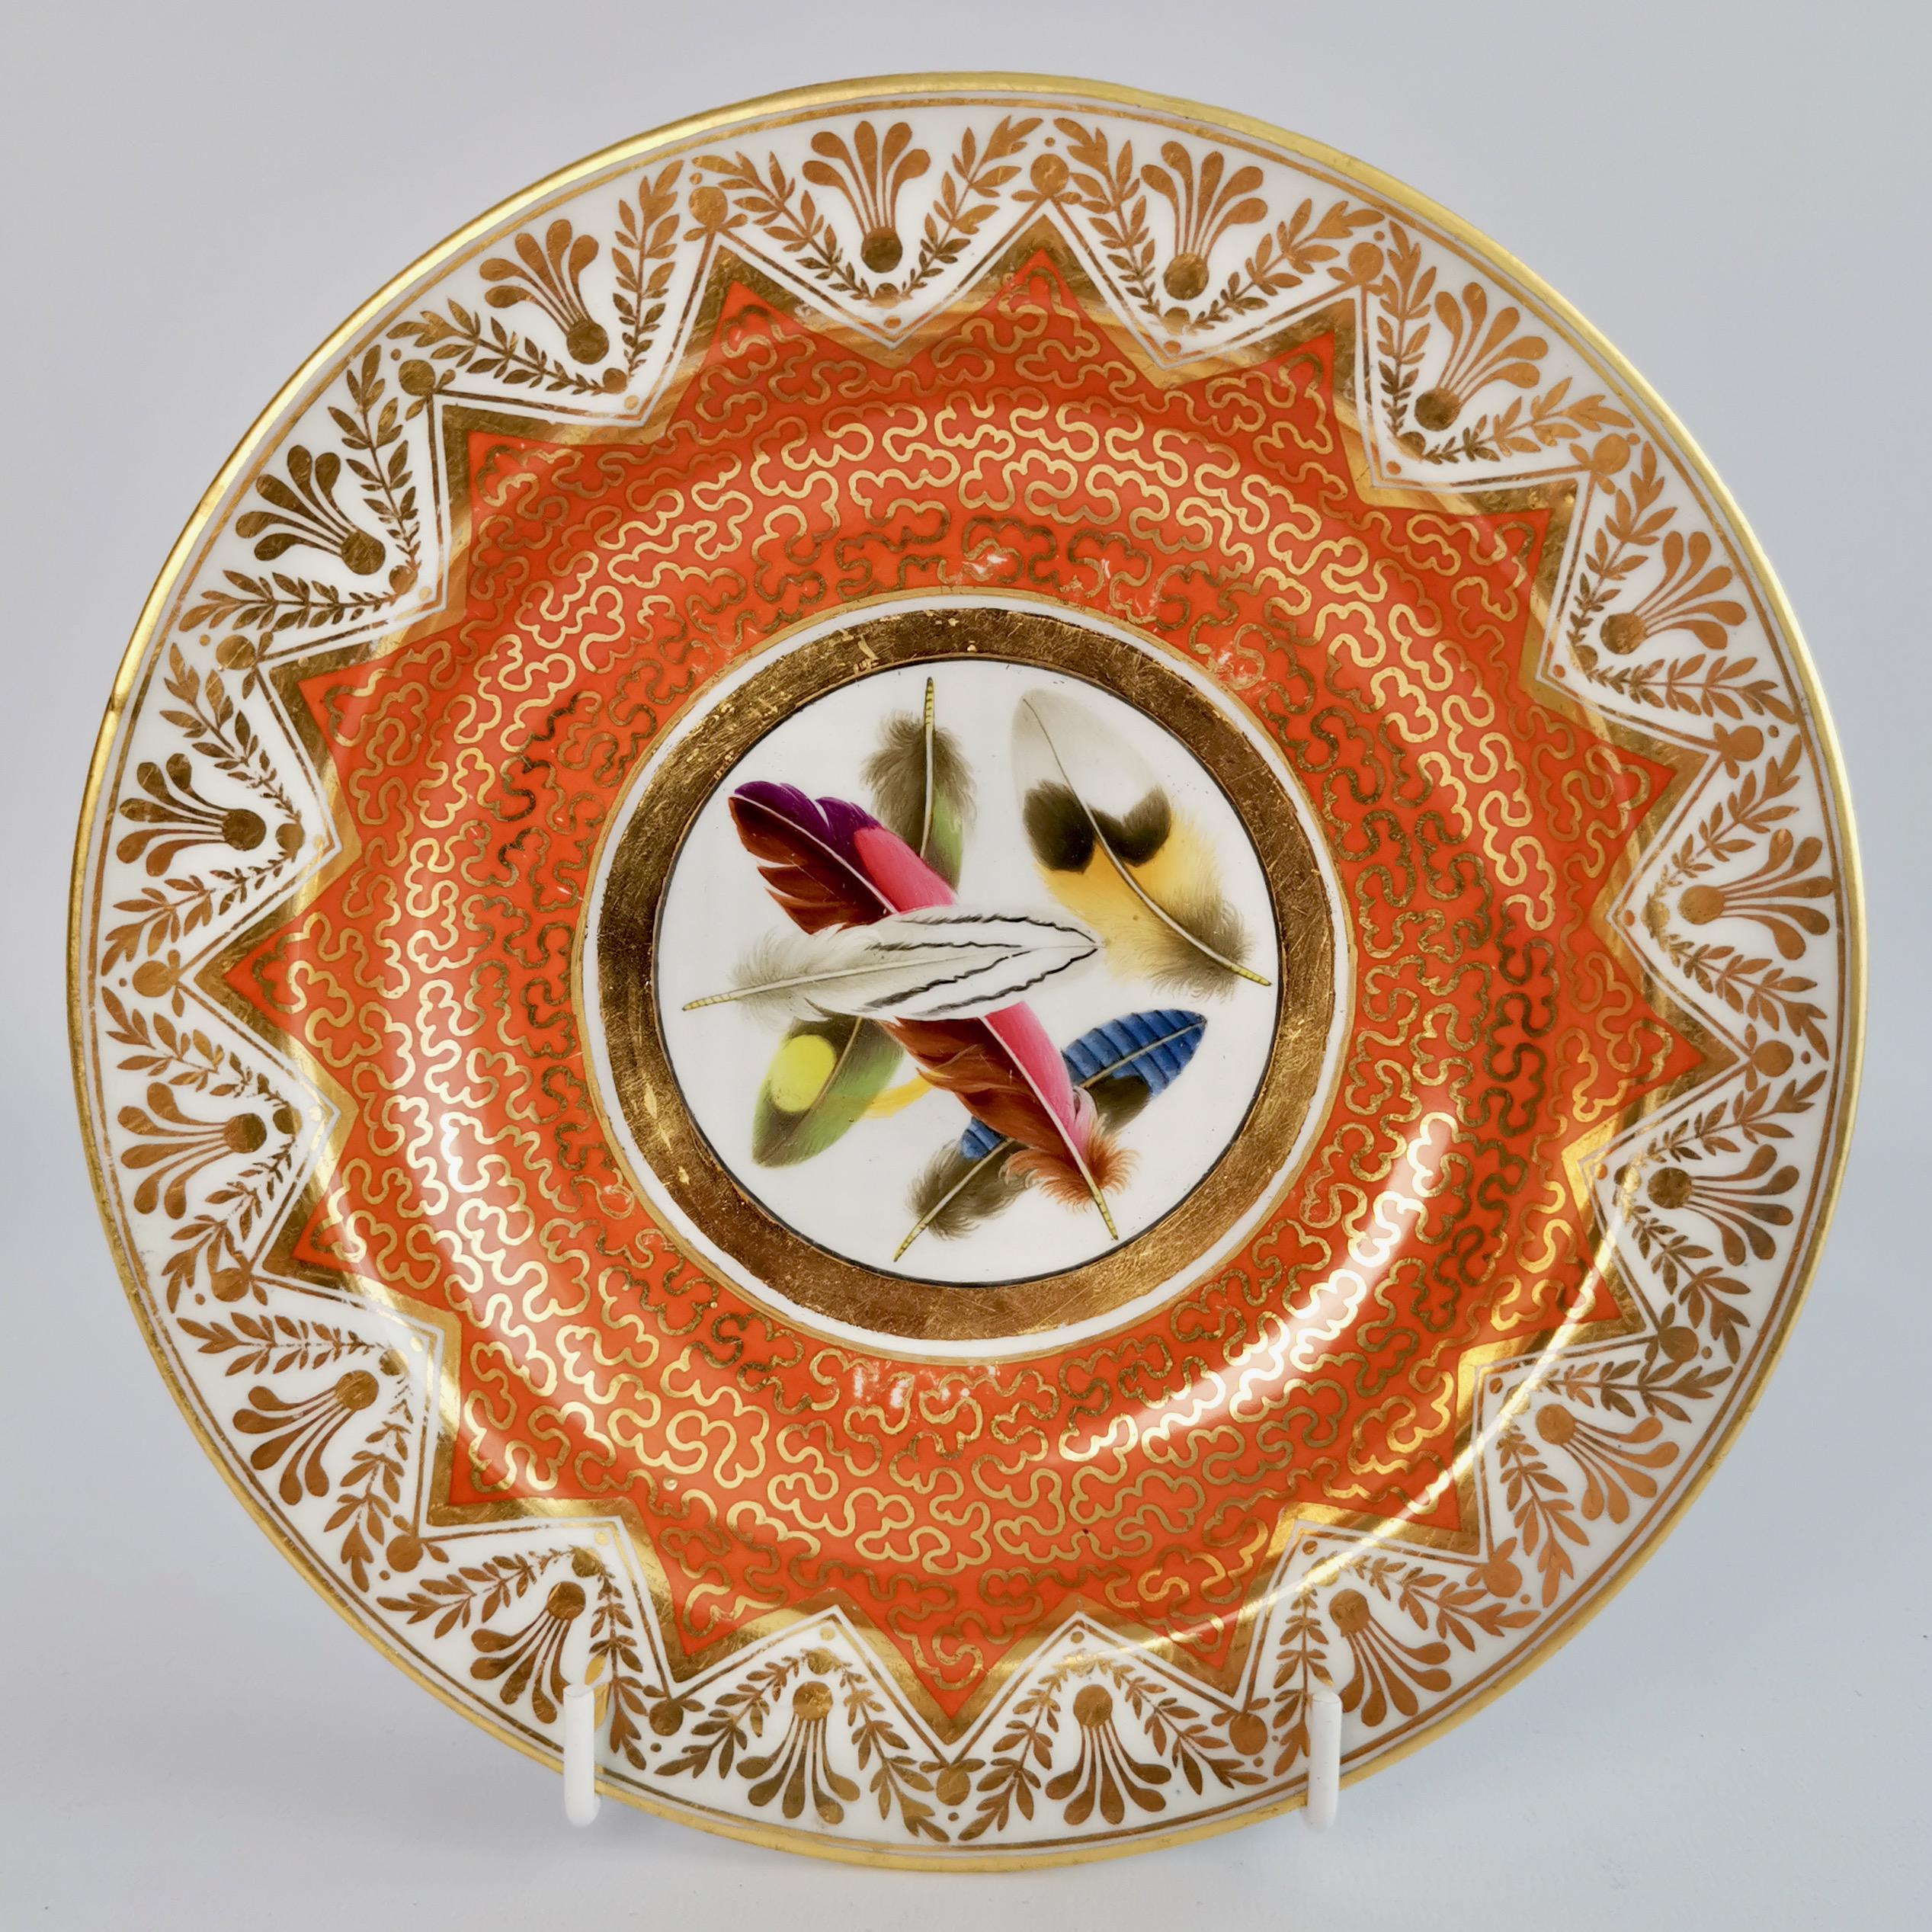 Chamberlains Worcester Porcelain Dessert Service, Orange, Regency, circa 1815 3